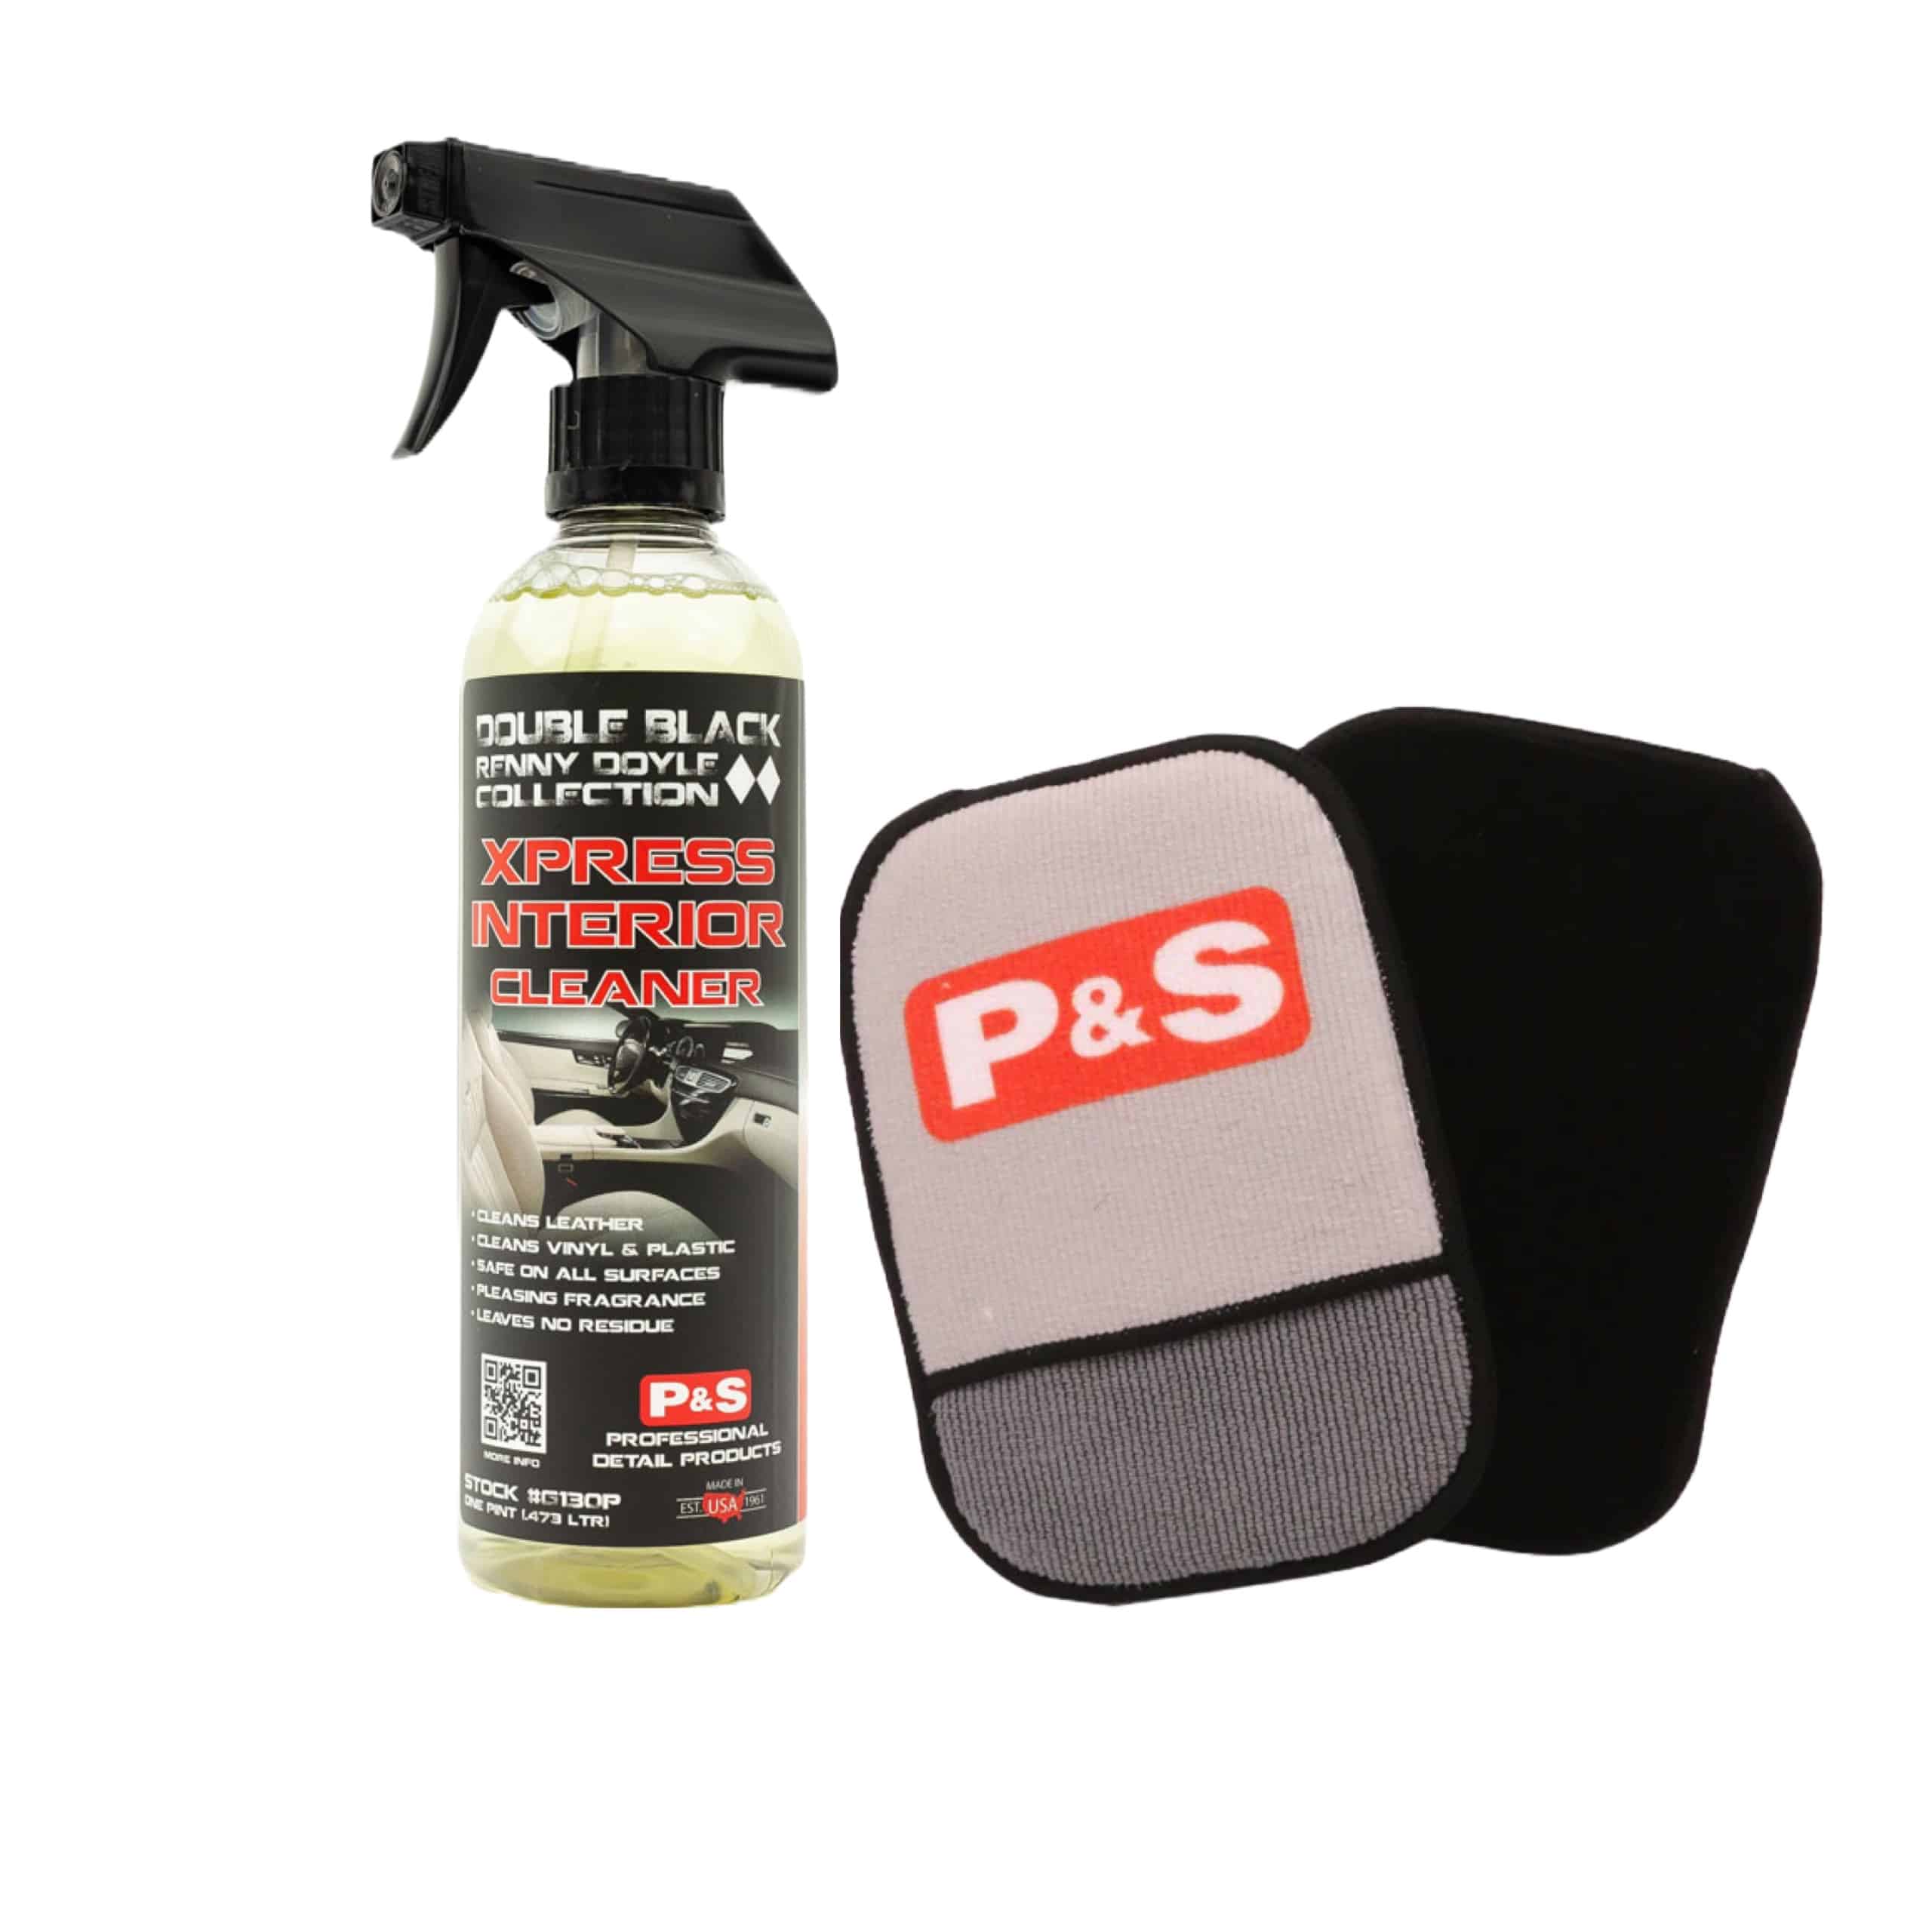 P&S XPRESS Interior Cleaner and Sidekick Kit